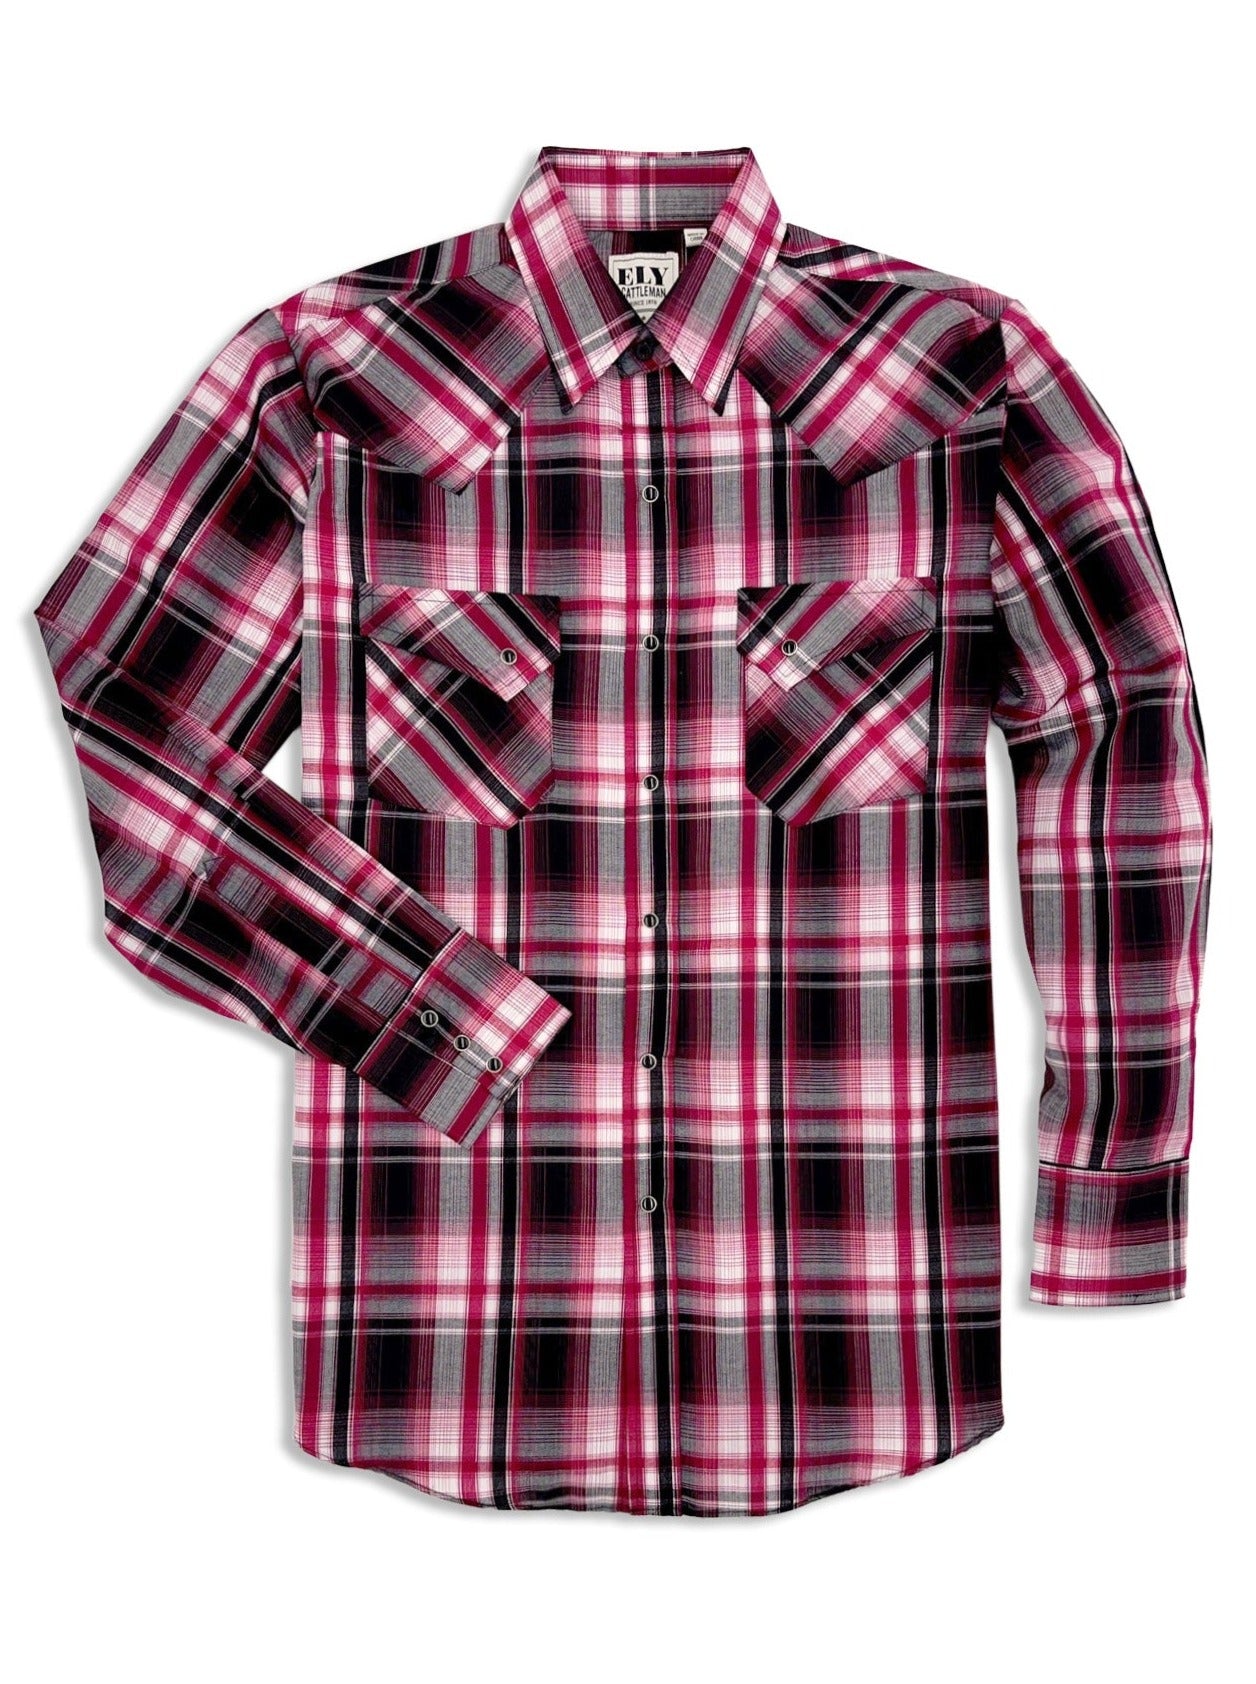 Ely Cattleman Western Pearl Snap Shirt Mens Size XL, Blue Plaid, Long  Sleeve Cowboy Shirt 